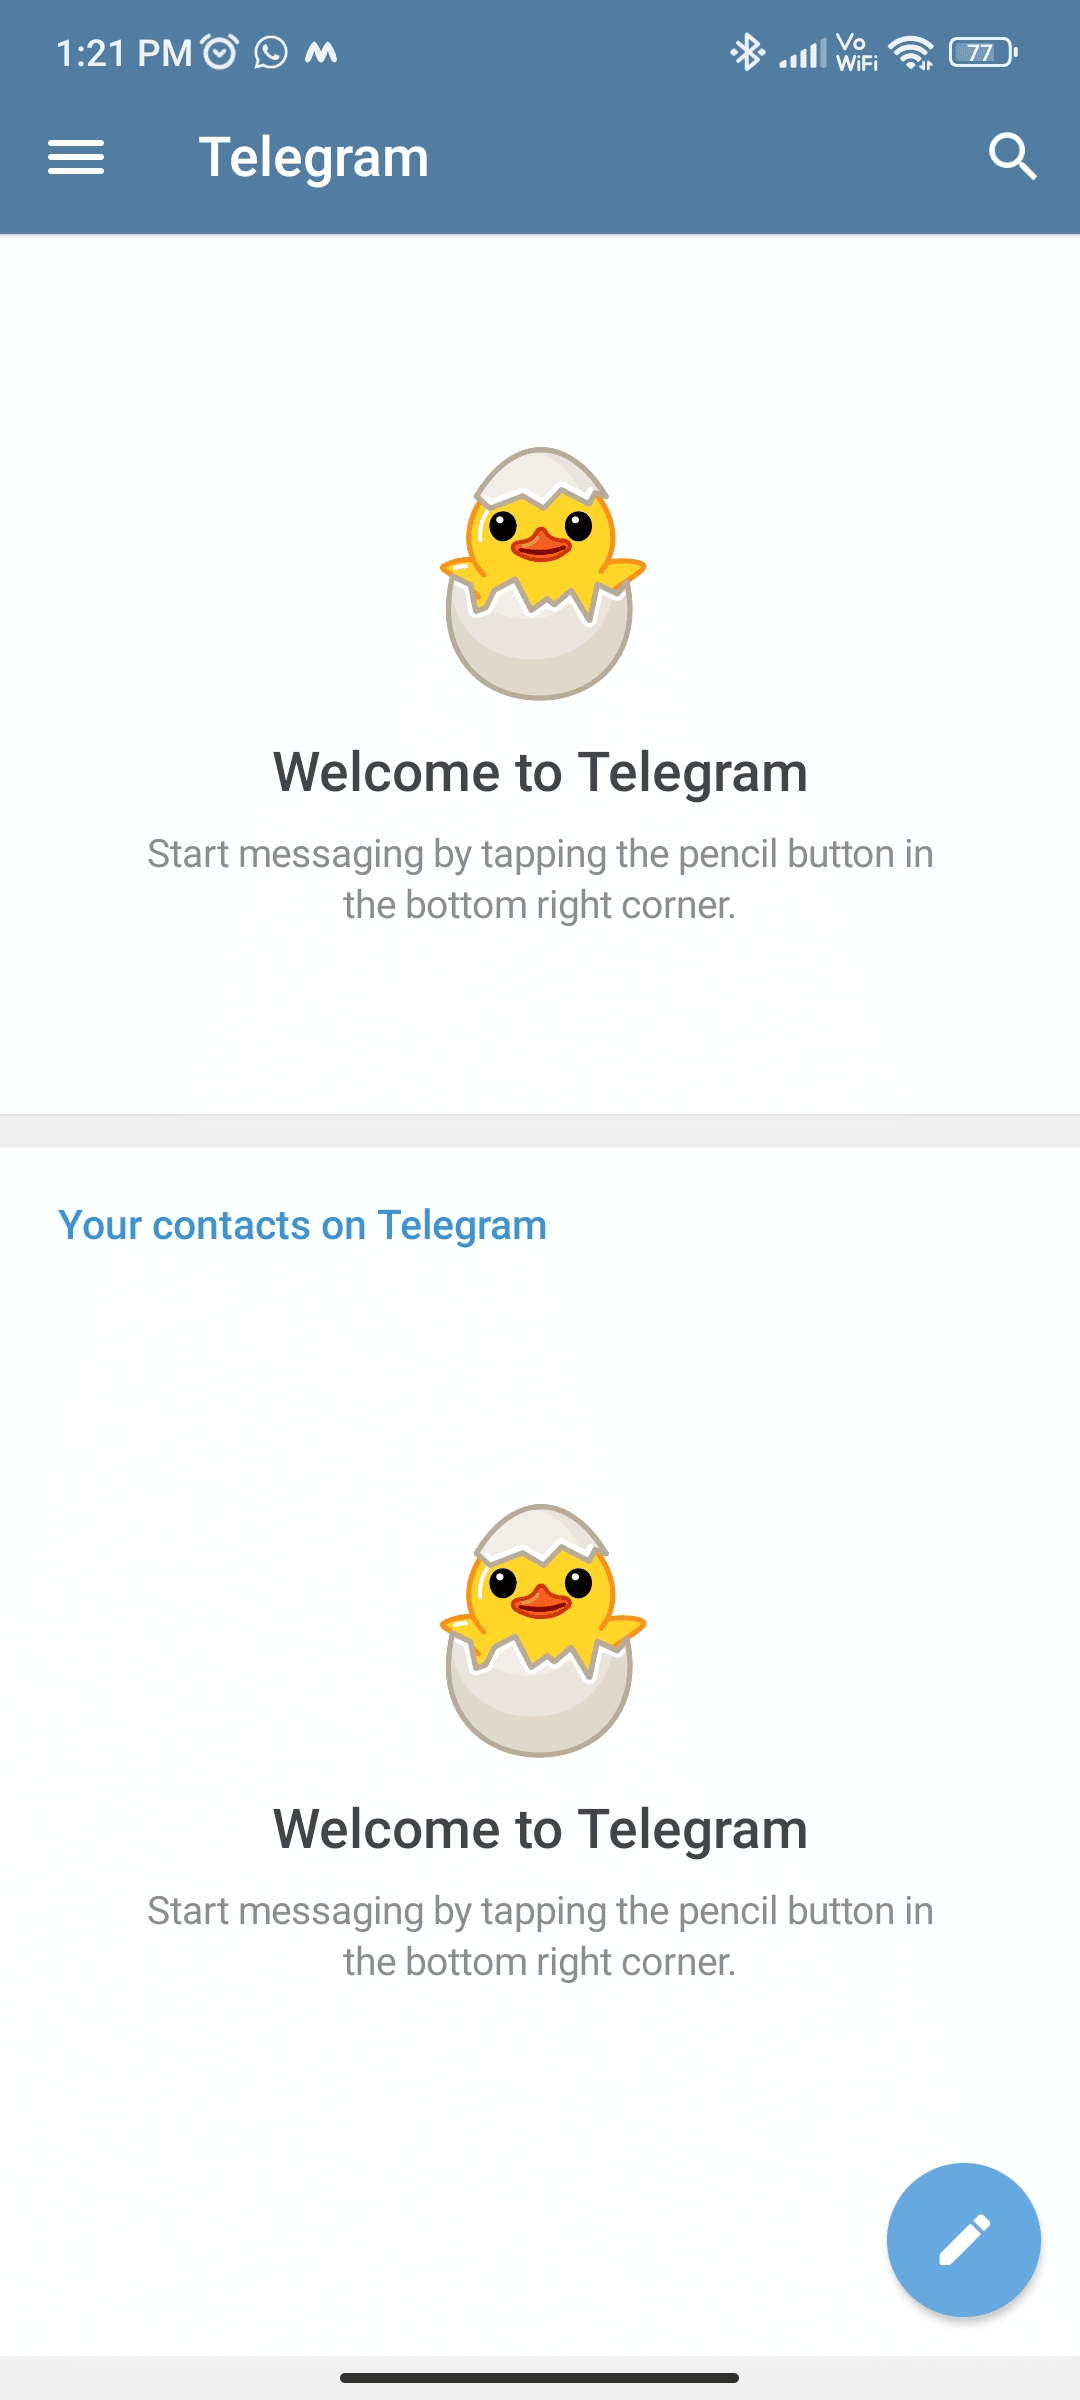 Open the Telegram app on your phone